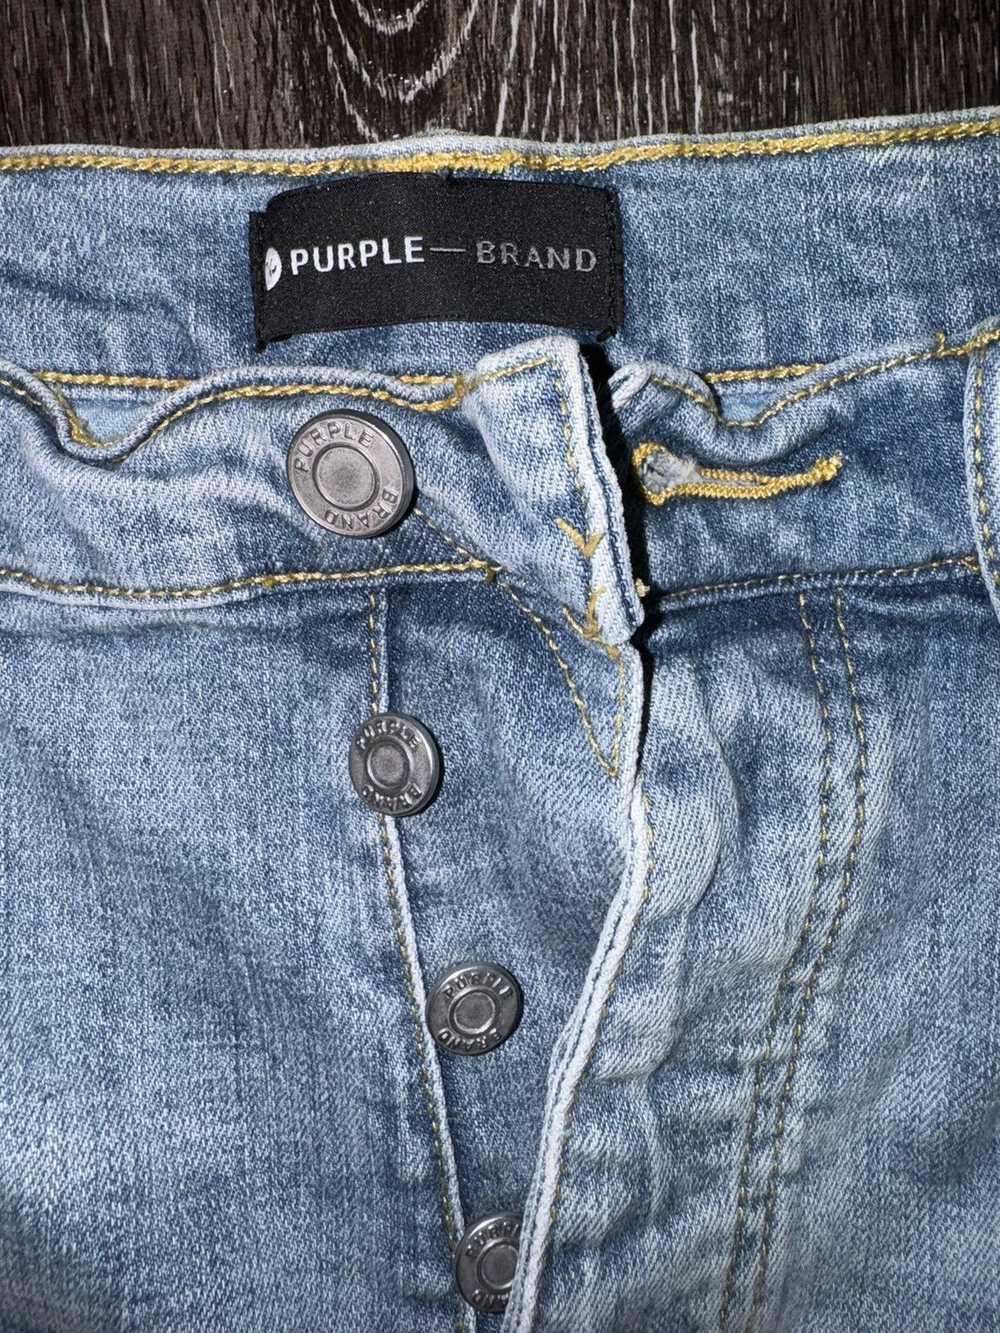 Purple Brand Purple Jeans - image 2